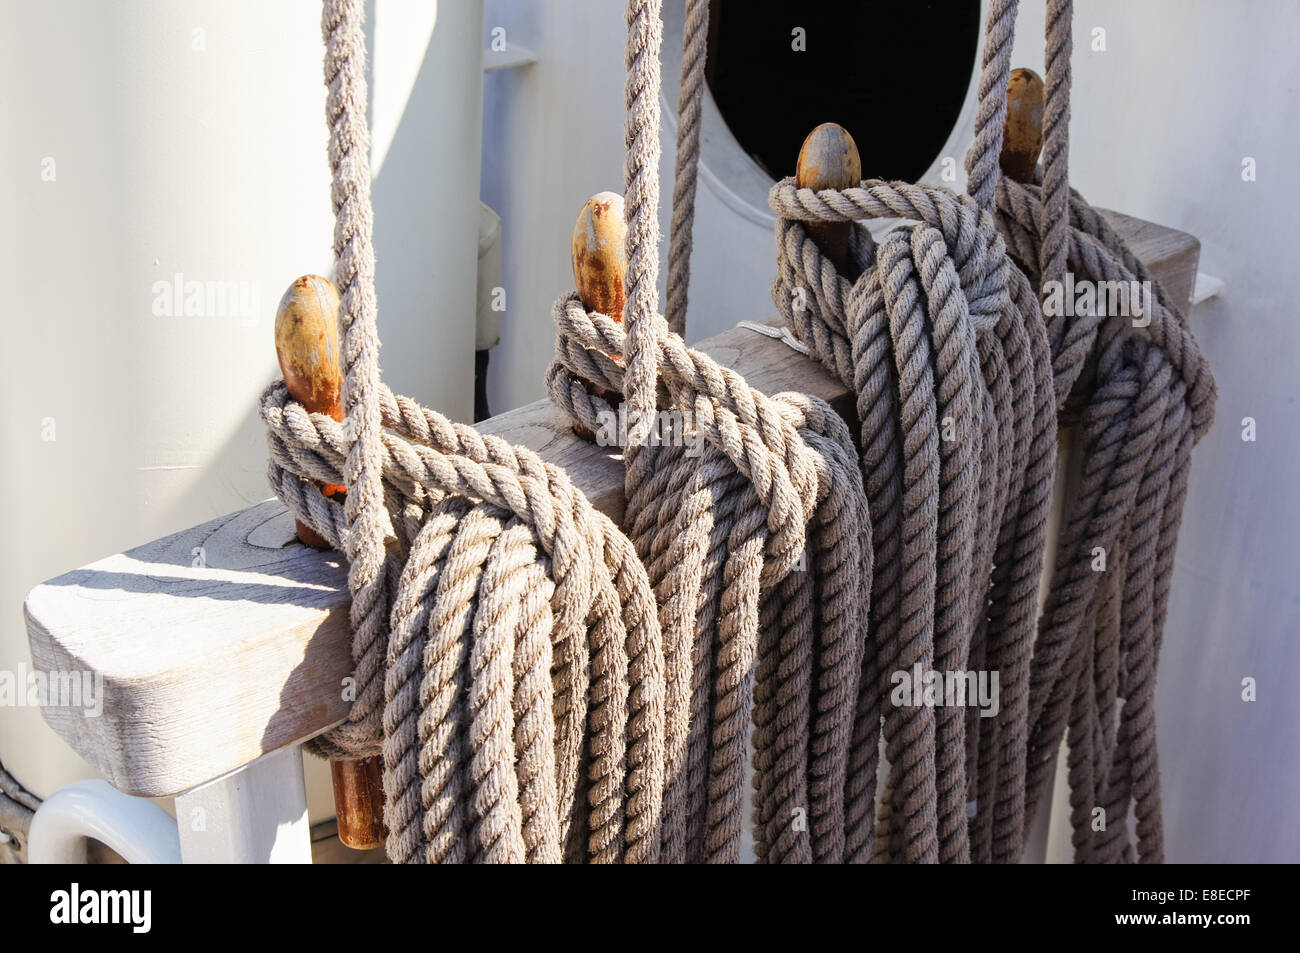 Aparejo de barcos altos, cuerdas atadas Foto de stock